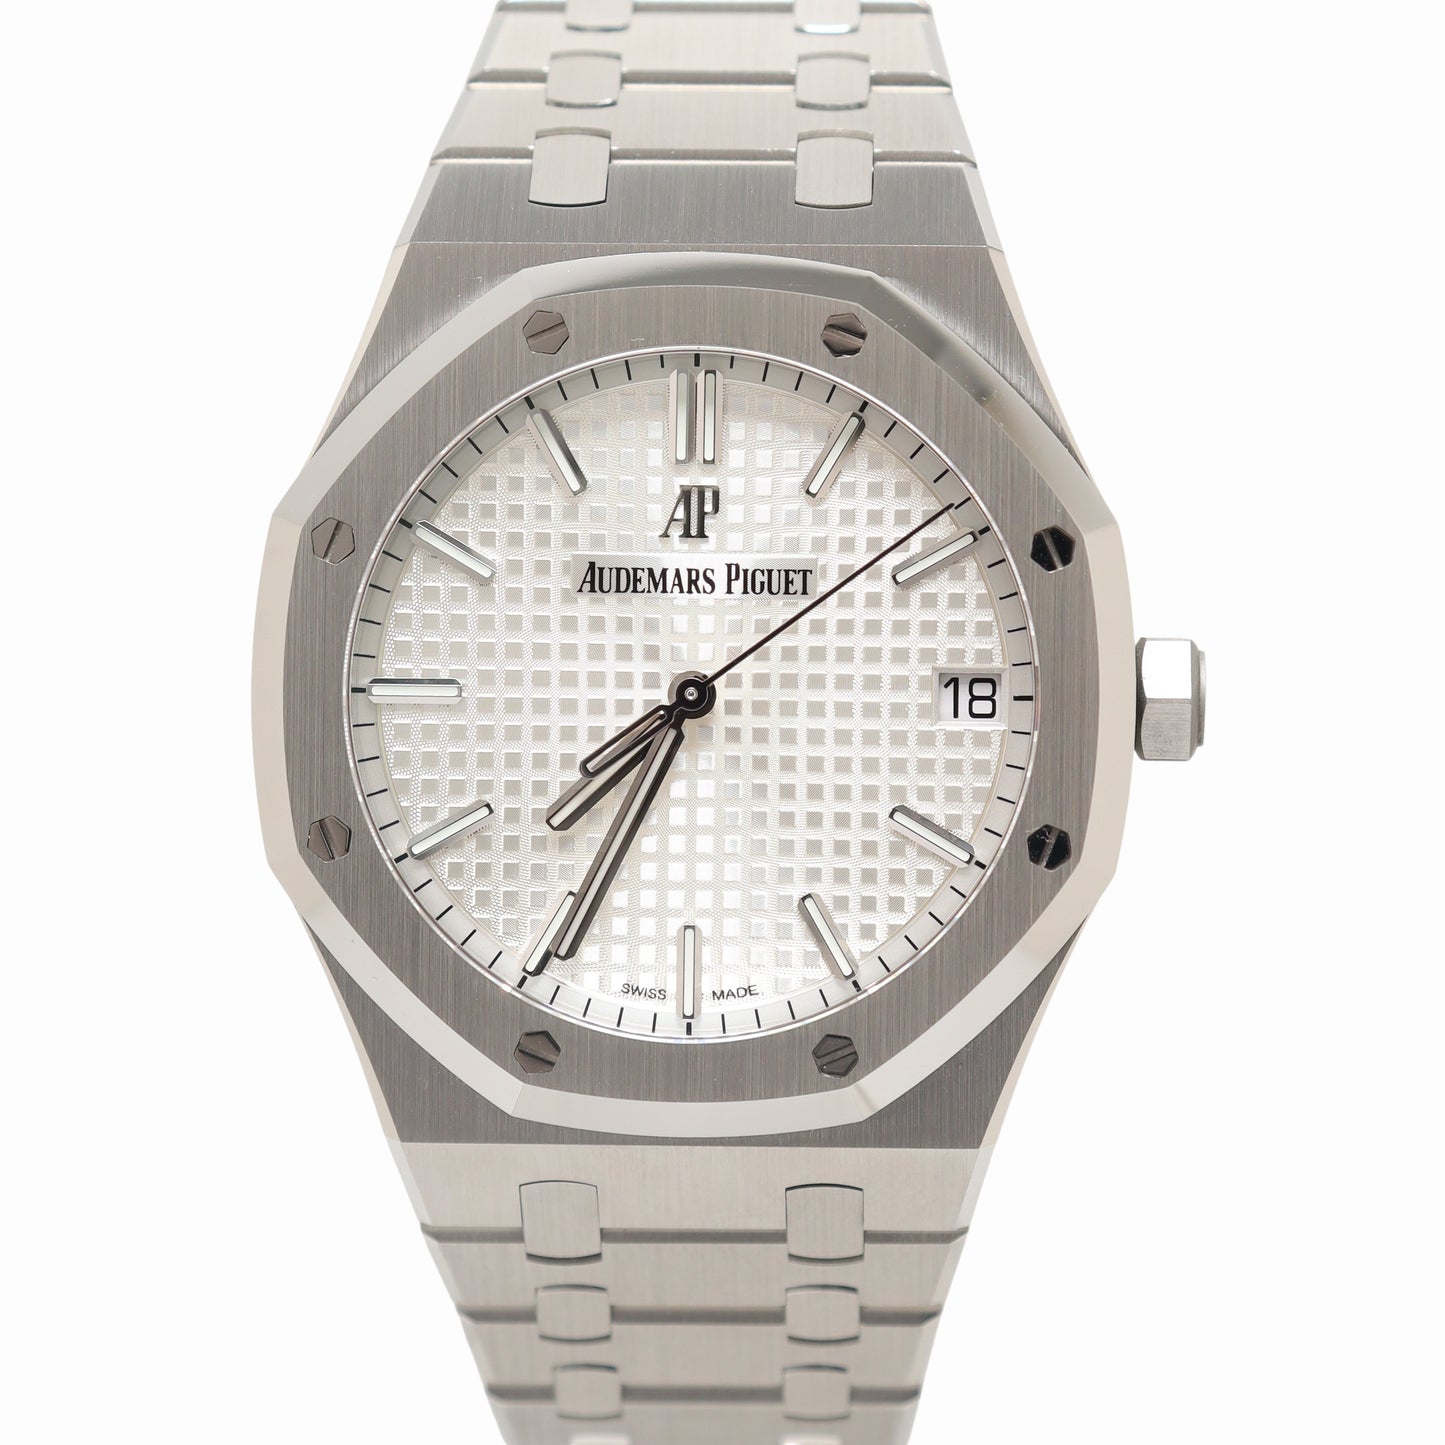 Audemars Piguet Royal Oak 41mm Stainless Steel White Grande Tapisserie Dial Watch Reference# 15500ST.OO.1220ST.04 - Happy Jewelers Fine Jewelry Lifetime Warranty